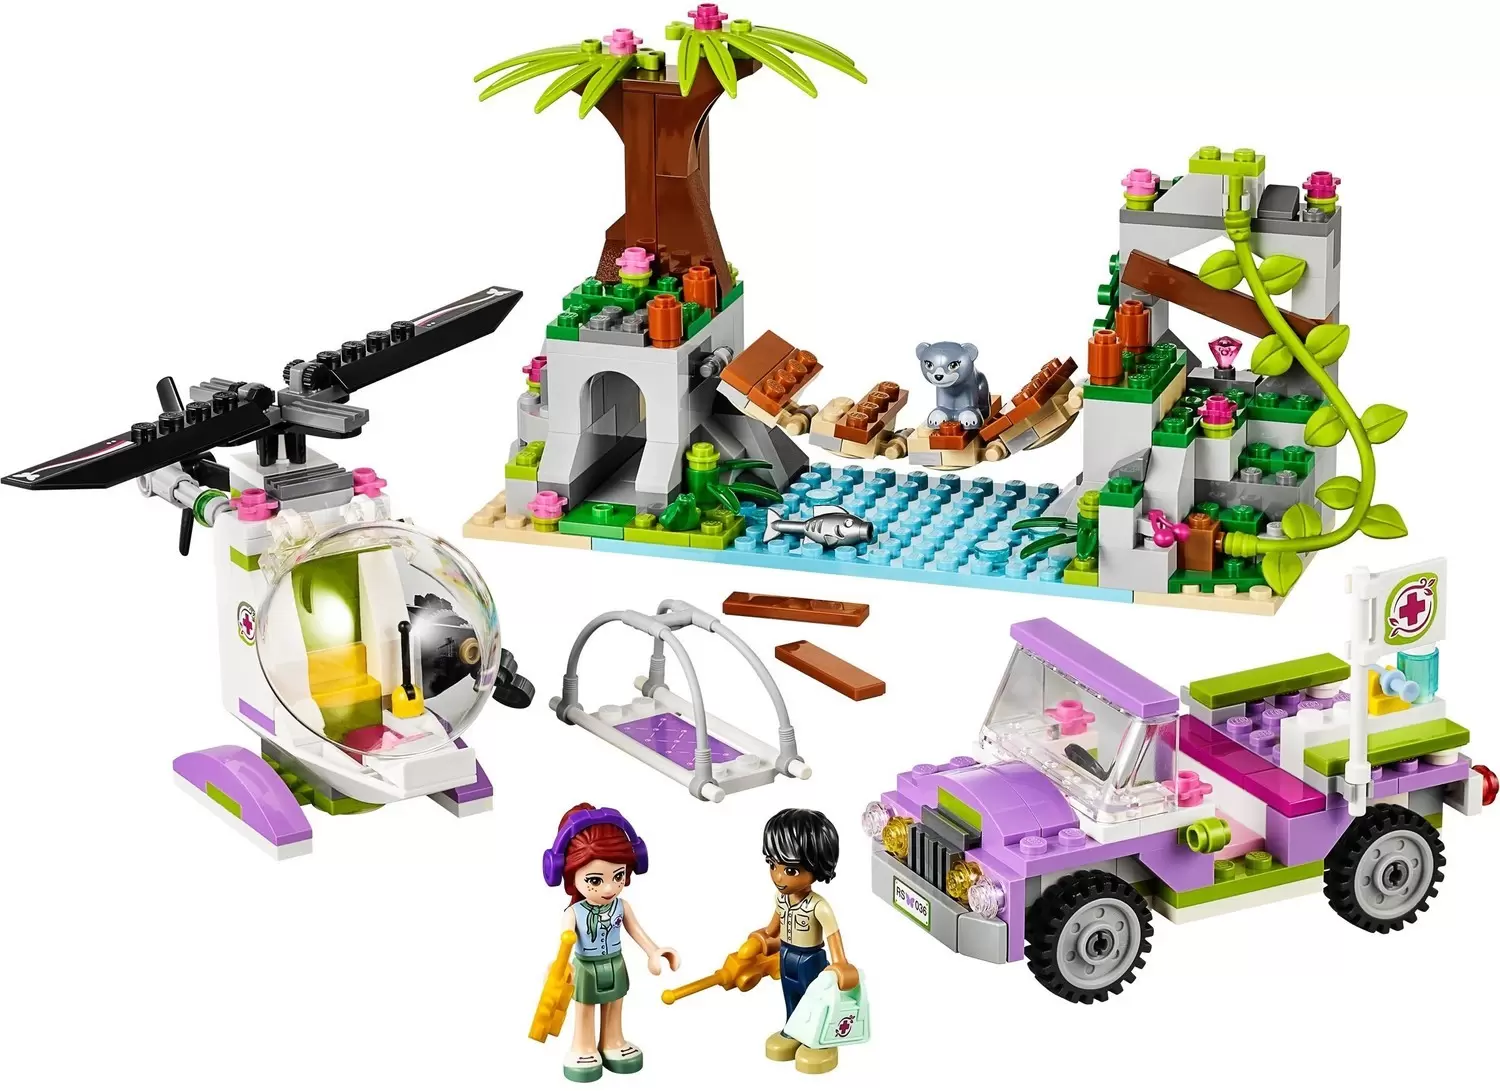 LEGO Friends - Jungle Bridge Rescue